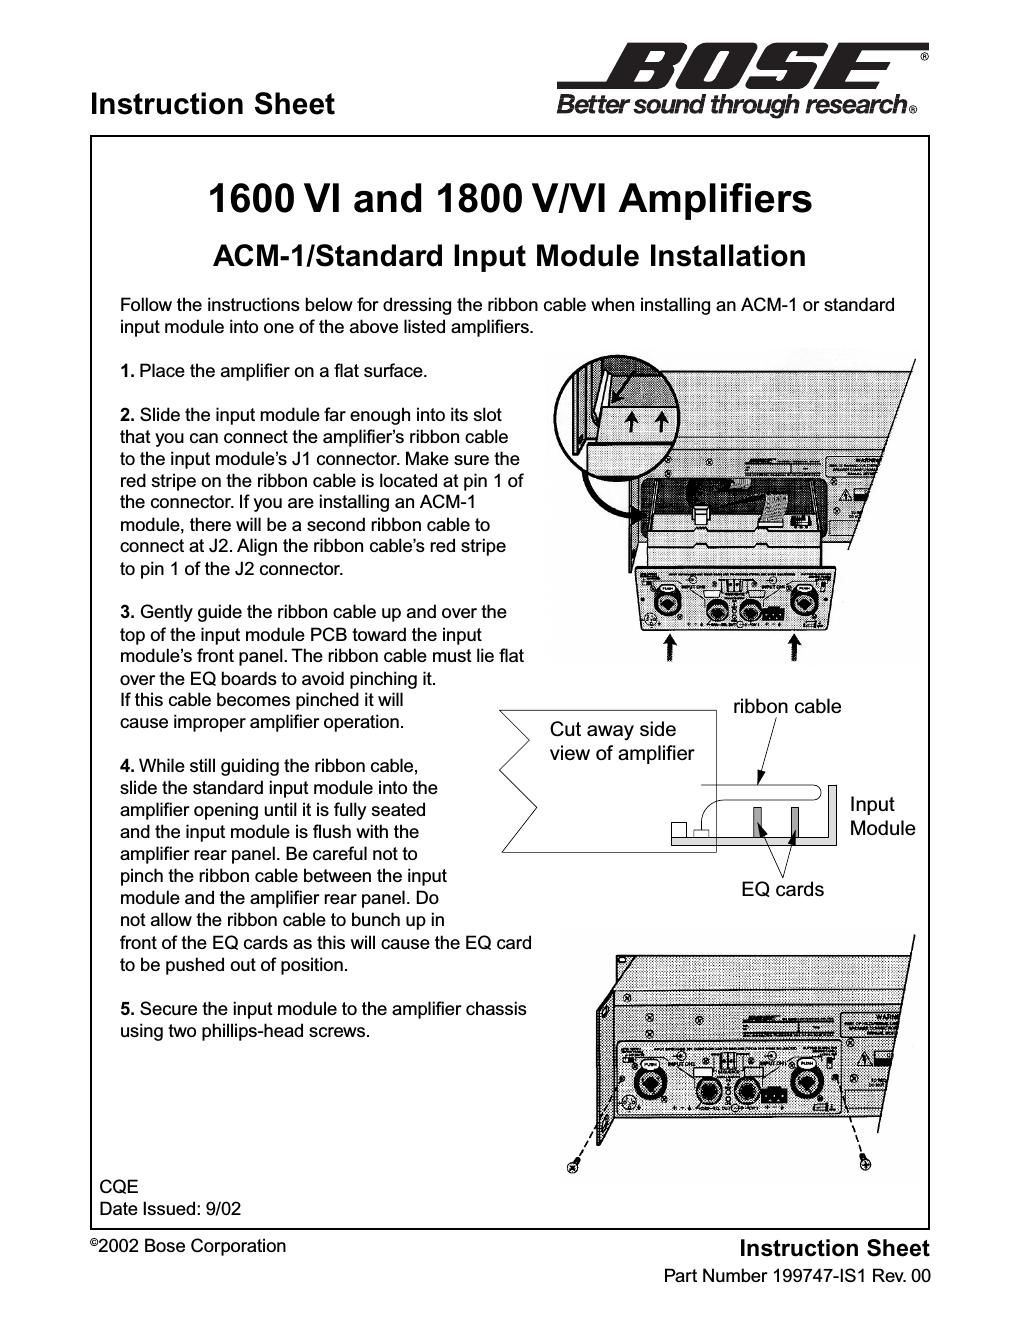 bose 1600 vi 1800 v vi amplifiers instruction sheet